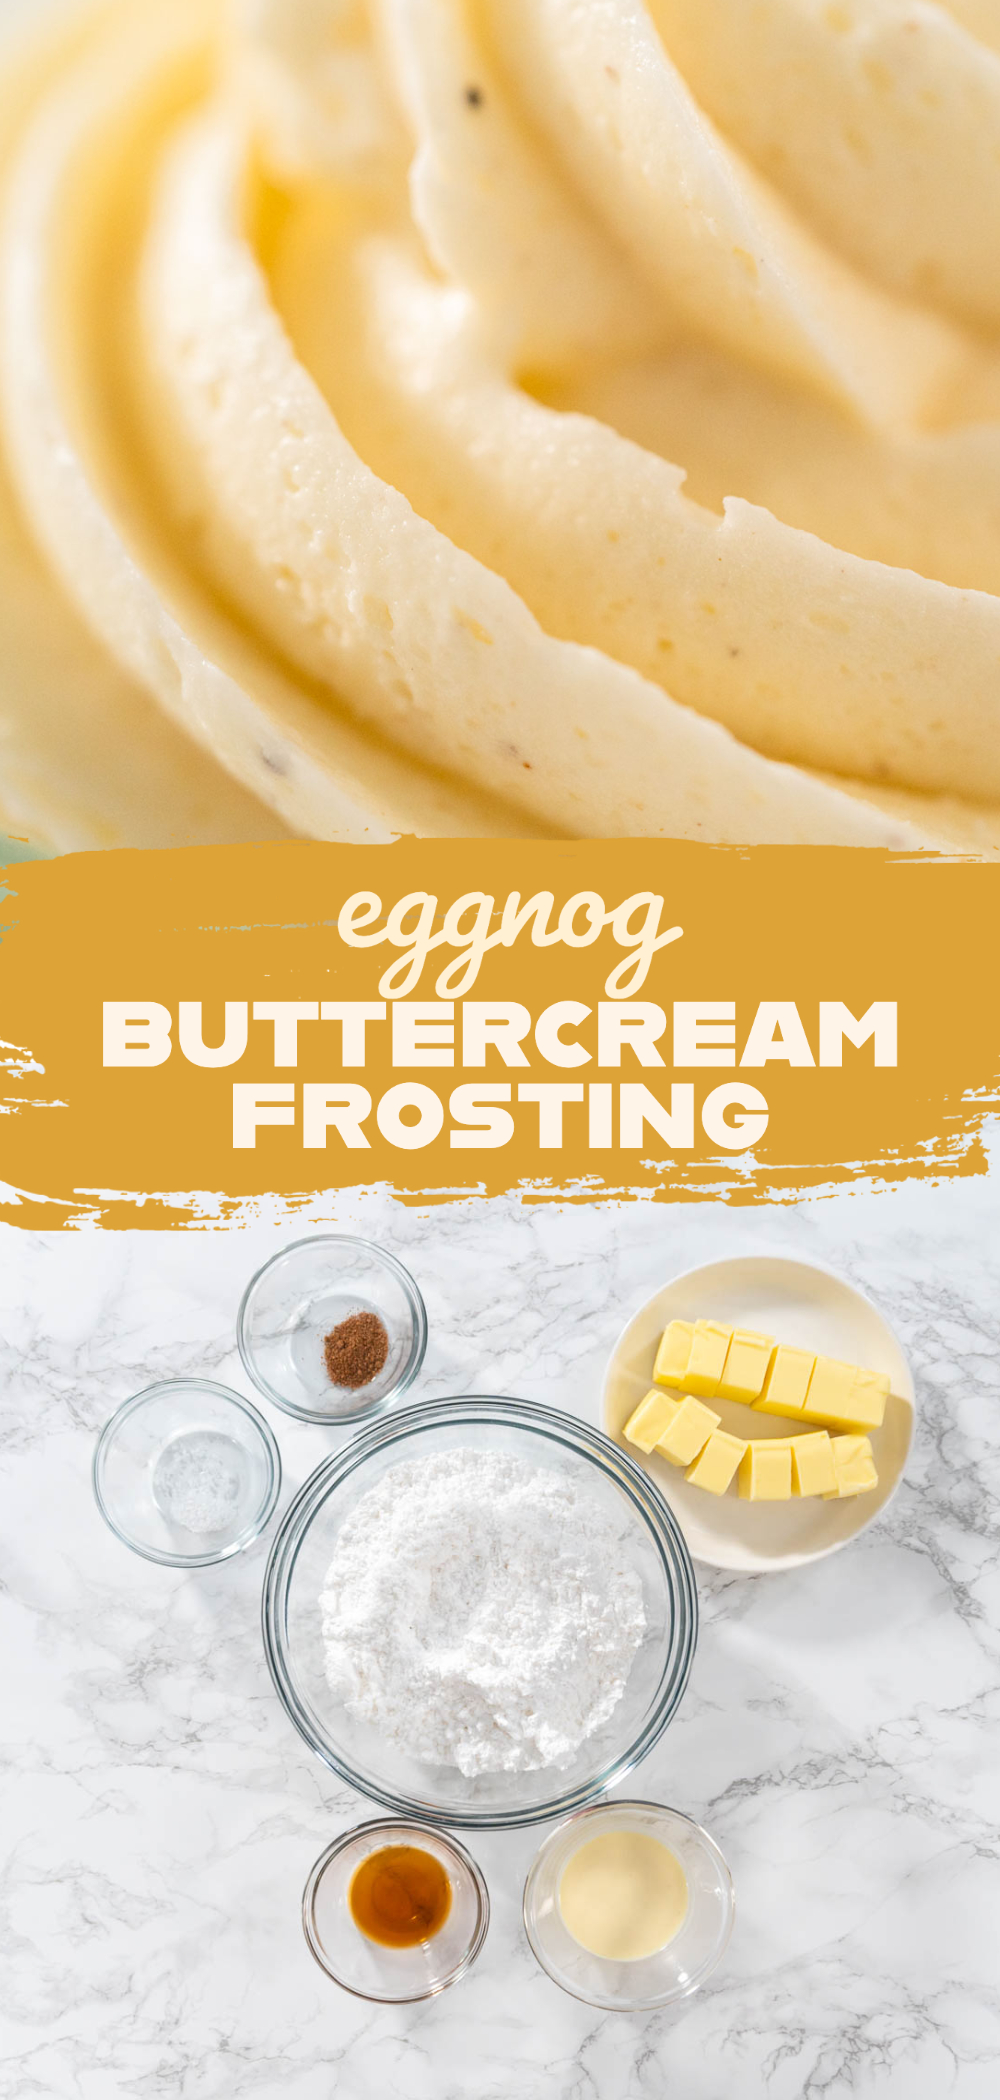 Eggnog Buttercream Frosting